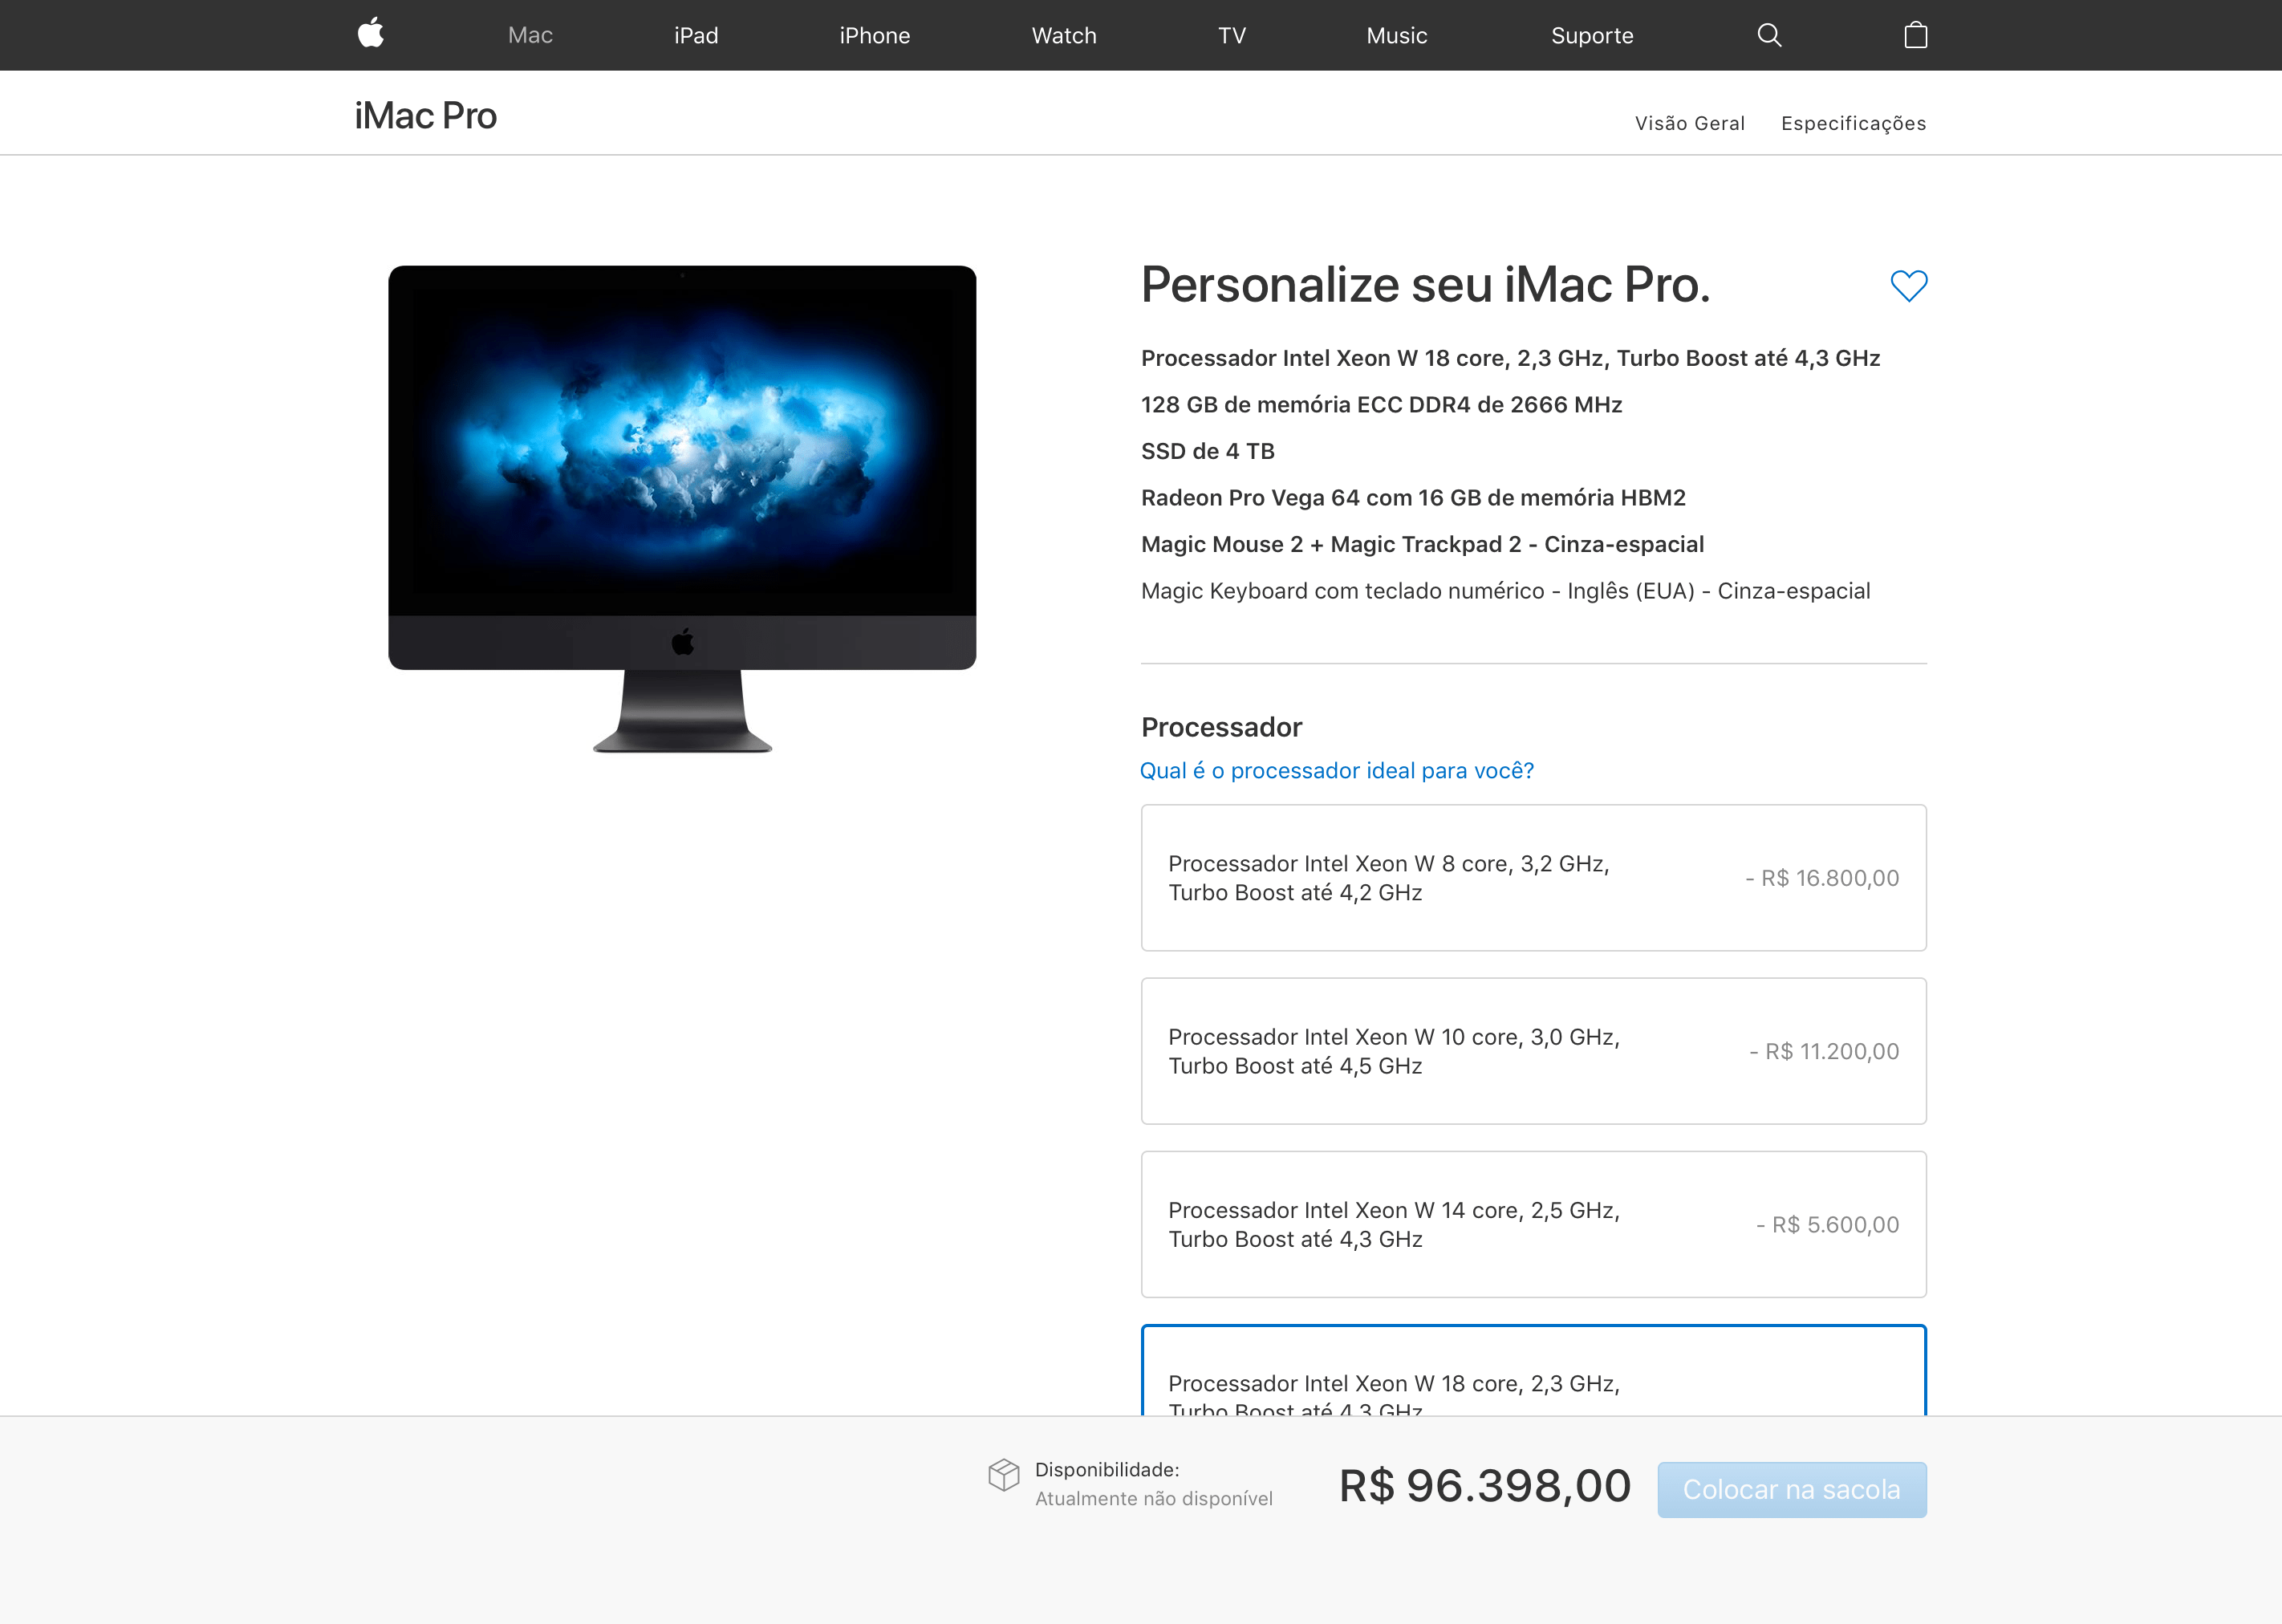 Maximum price of the iMac Pro in Brazil